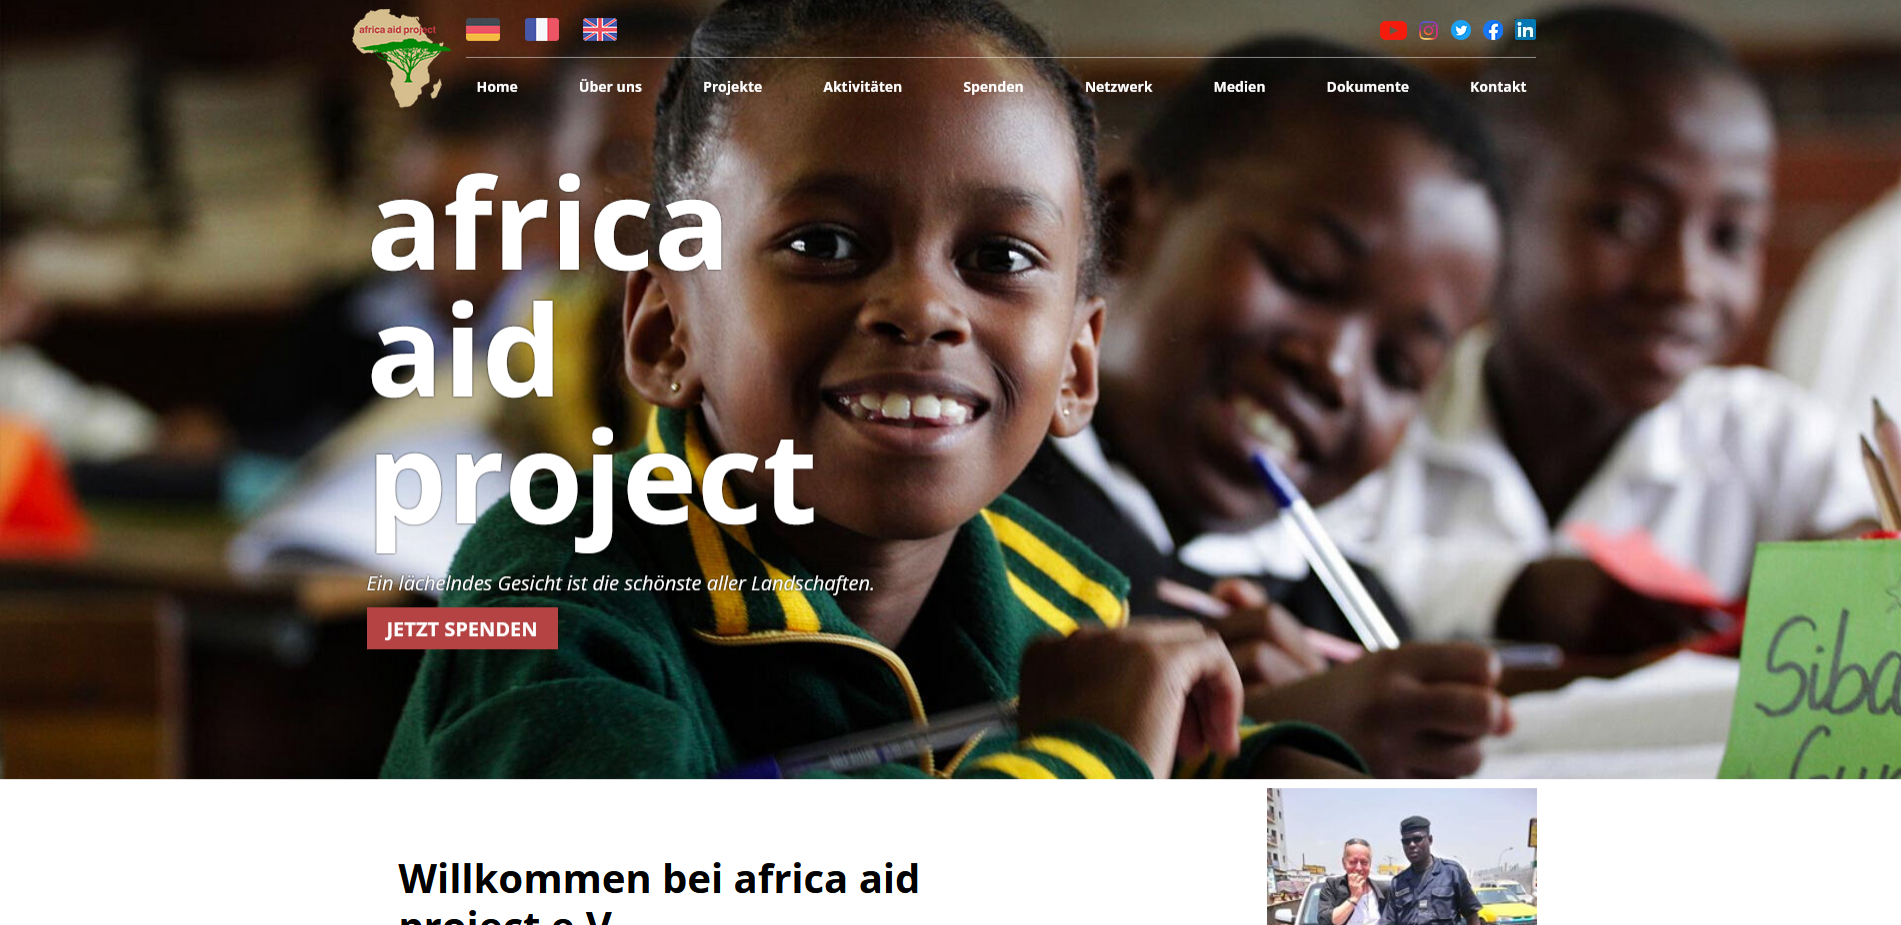 Afrika aid projekt e.V.